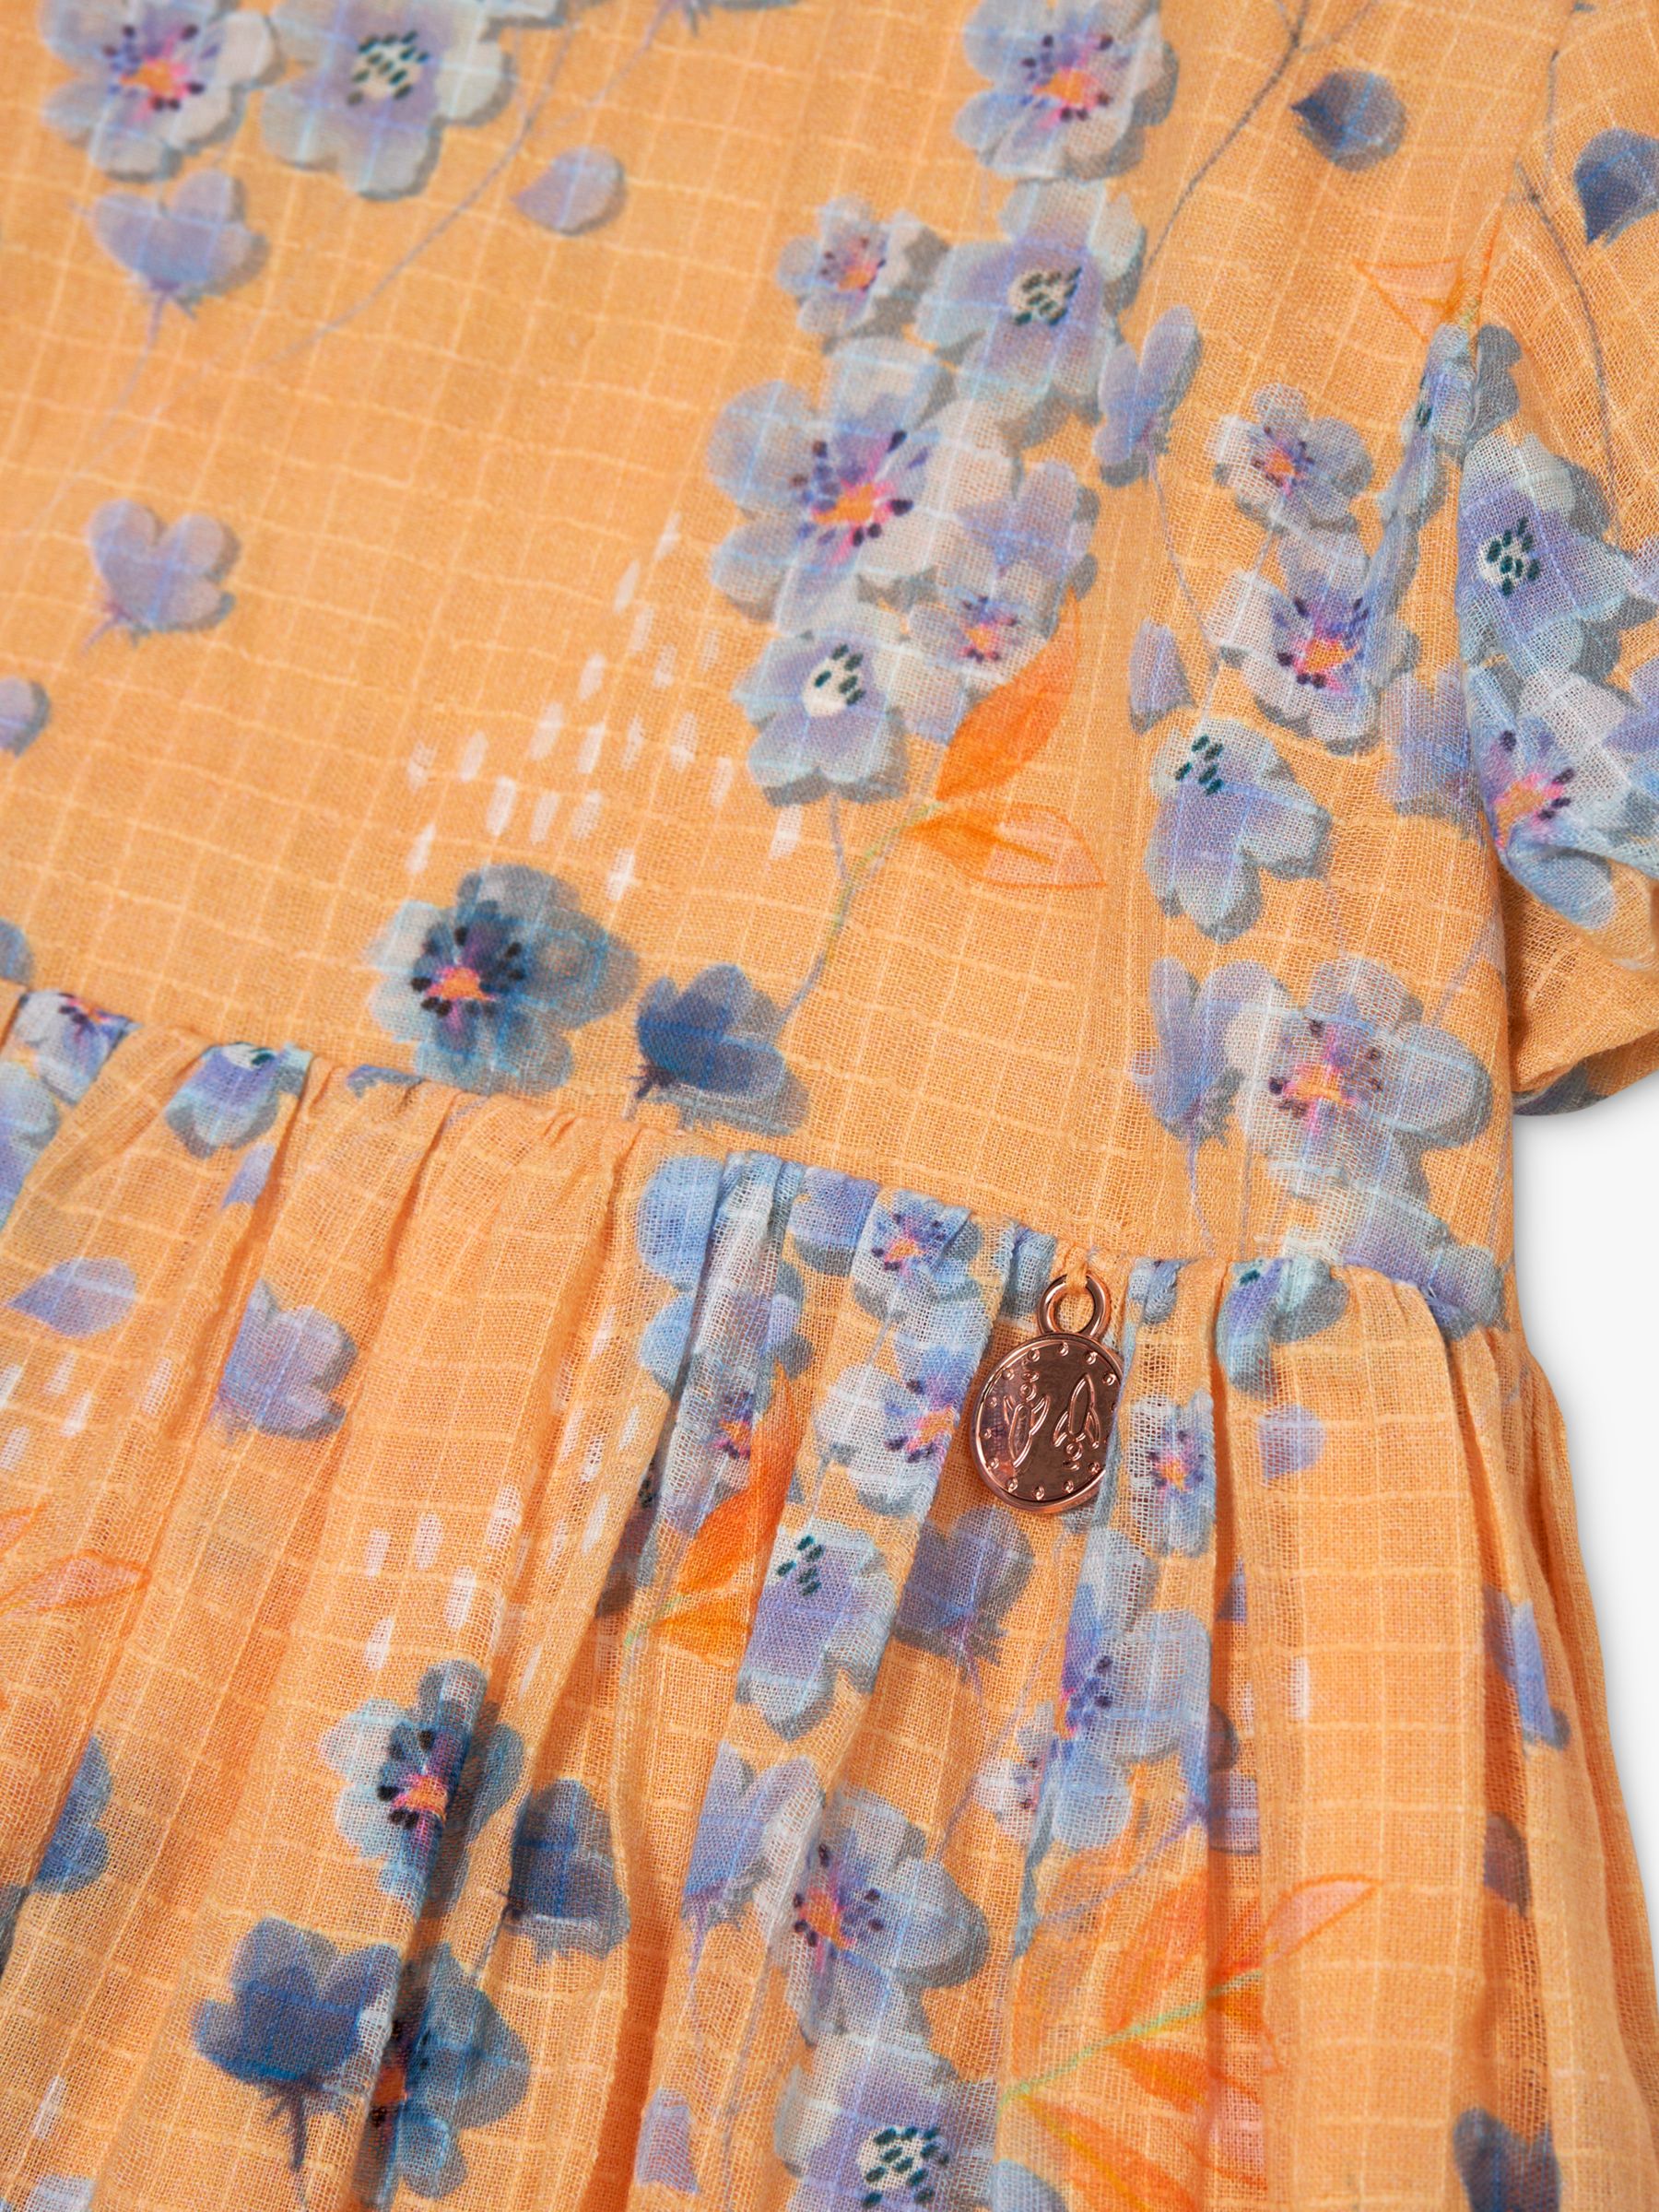 Buy Angel & Rocket Kids' Simone Textured Floral Print Dress, Apricot/Multi Online at johnlewis.com